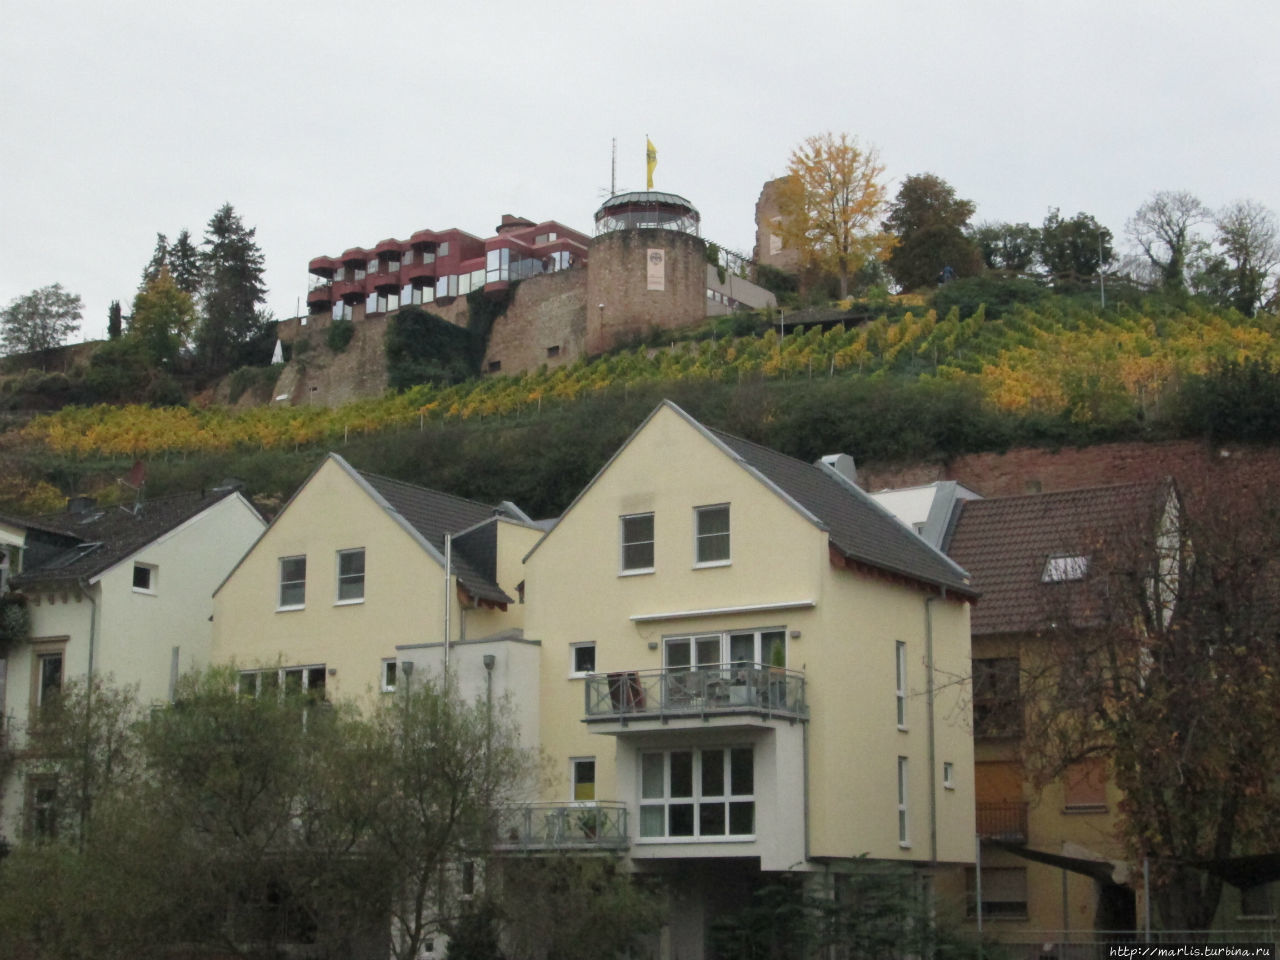 Резиденция графов фон Шпонхайм — замок Кауценбург (1205г.) Бад-Кройцнах, Германия